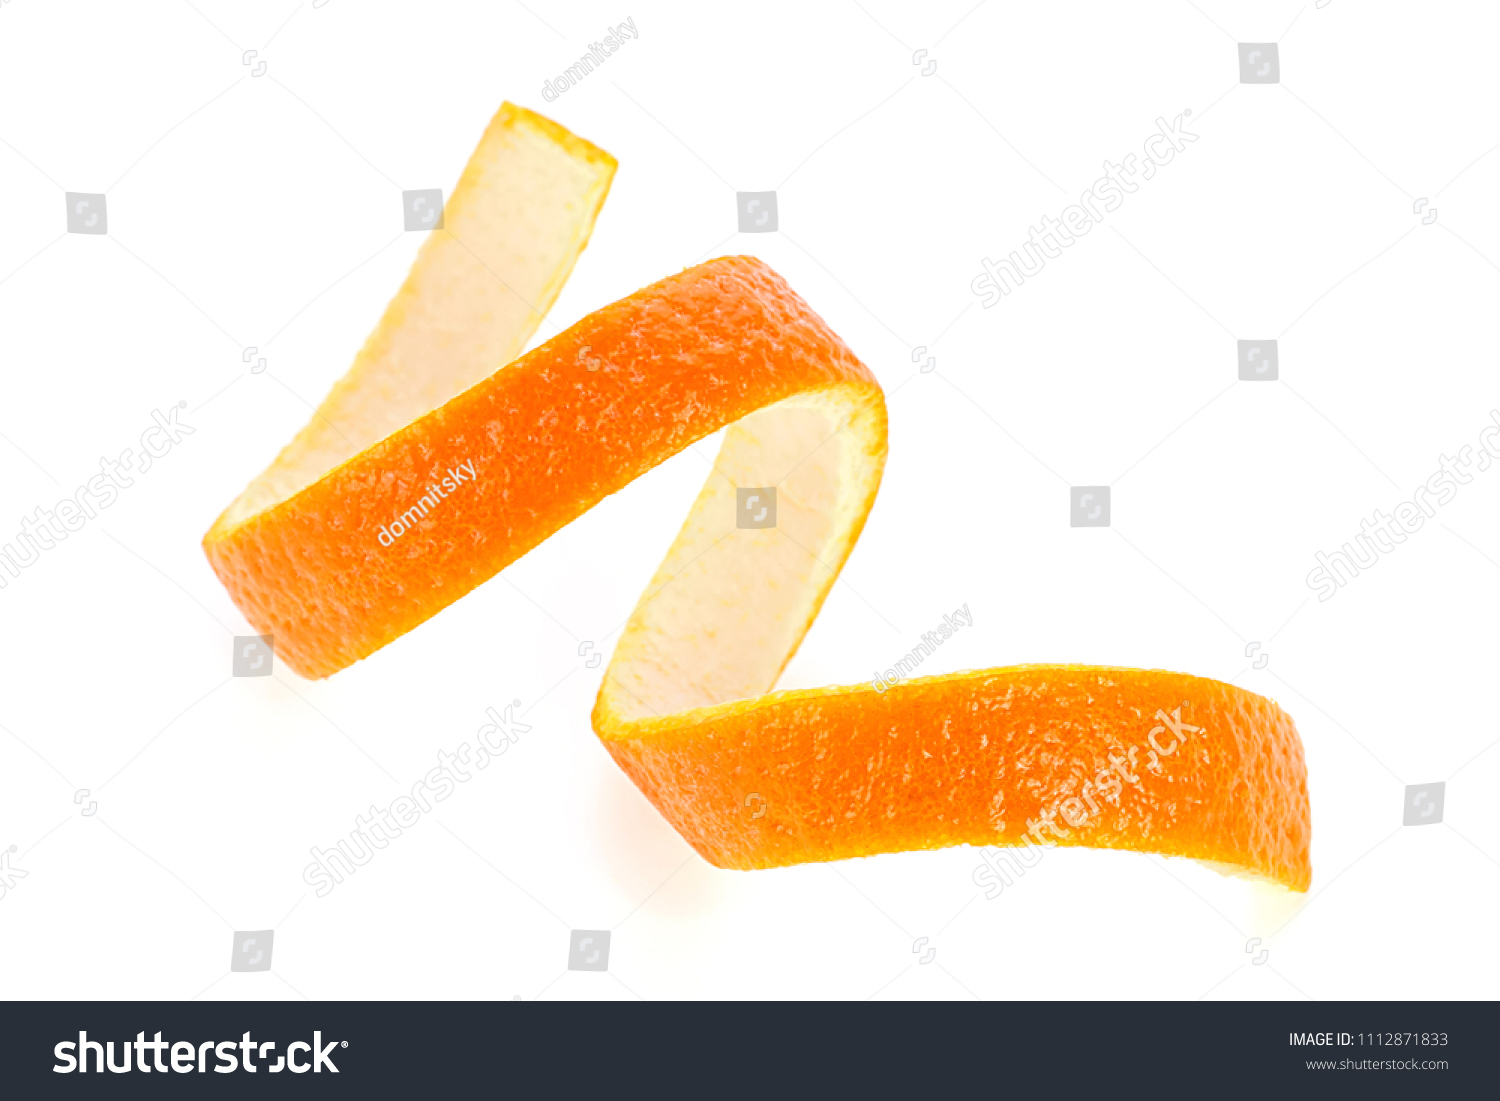 Single orange peel on a white background. Vitamin C, beauty health skin concept. #1112871833